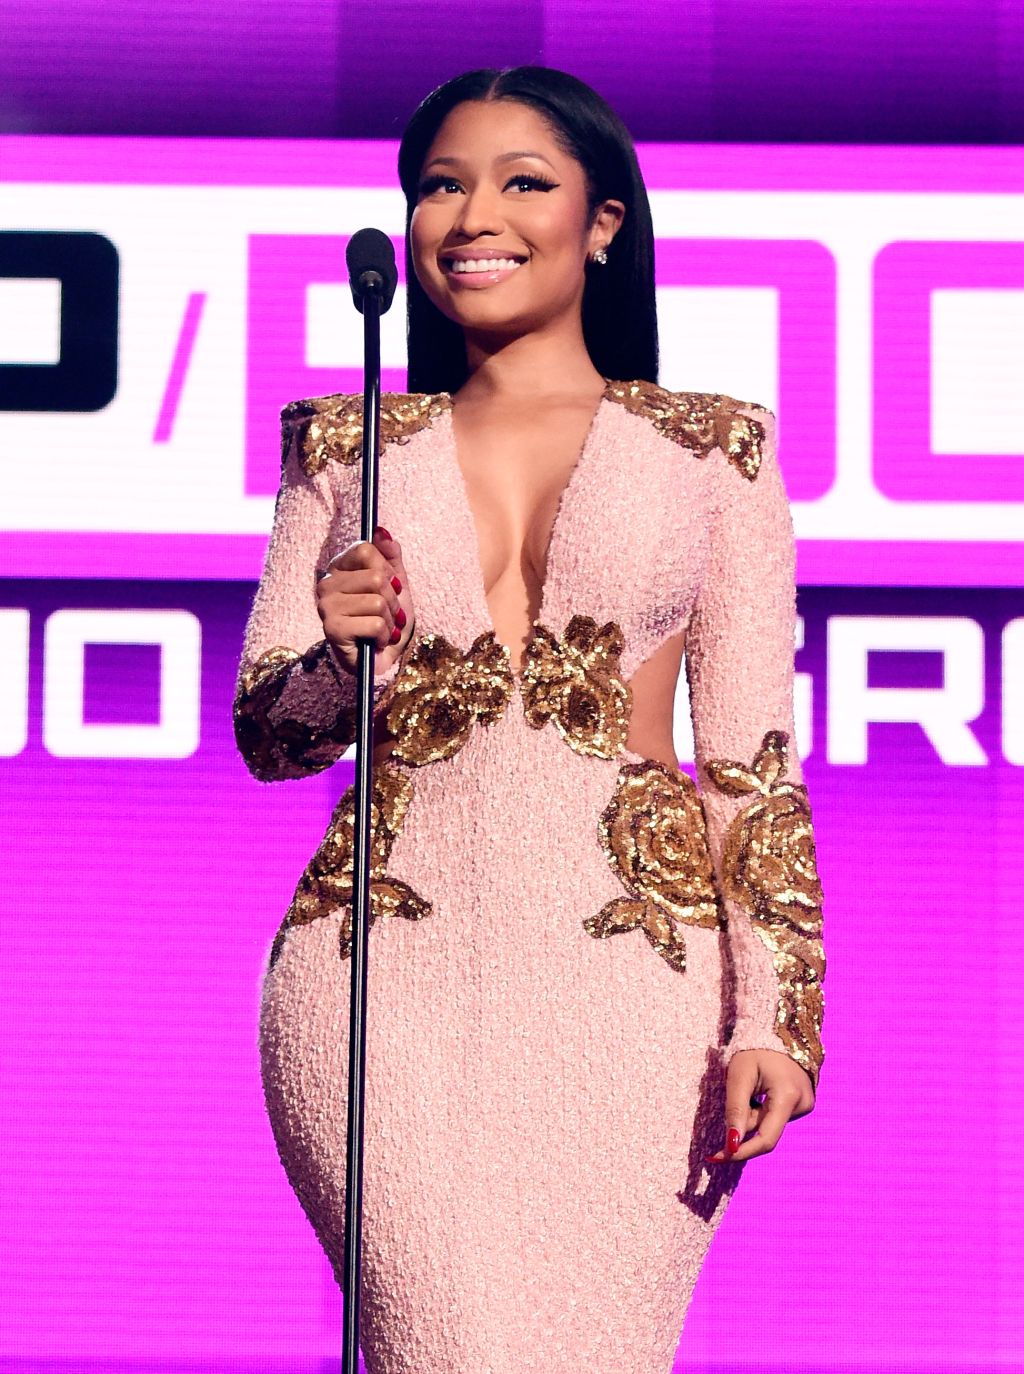 2015 American Music Awards - Roaming Show